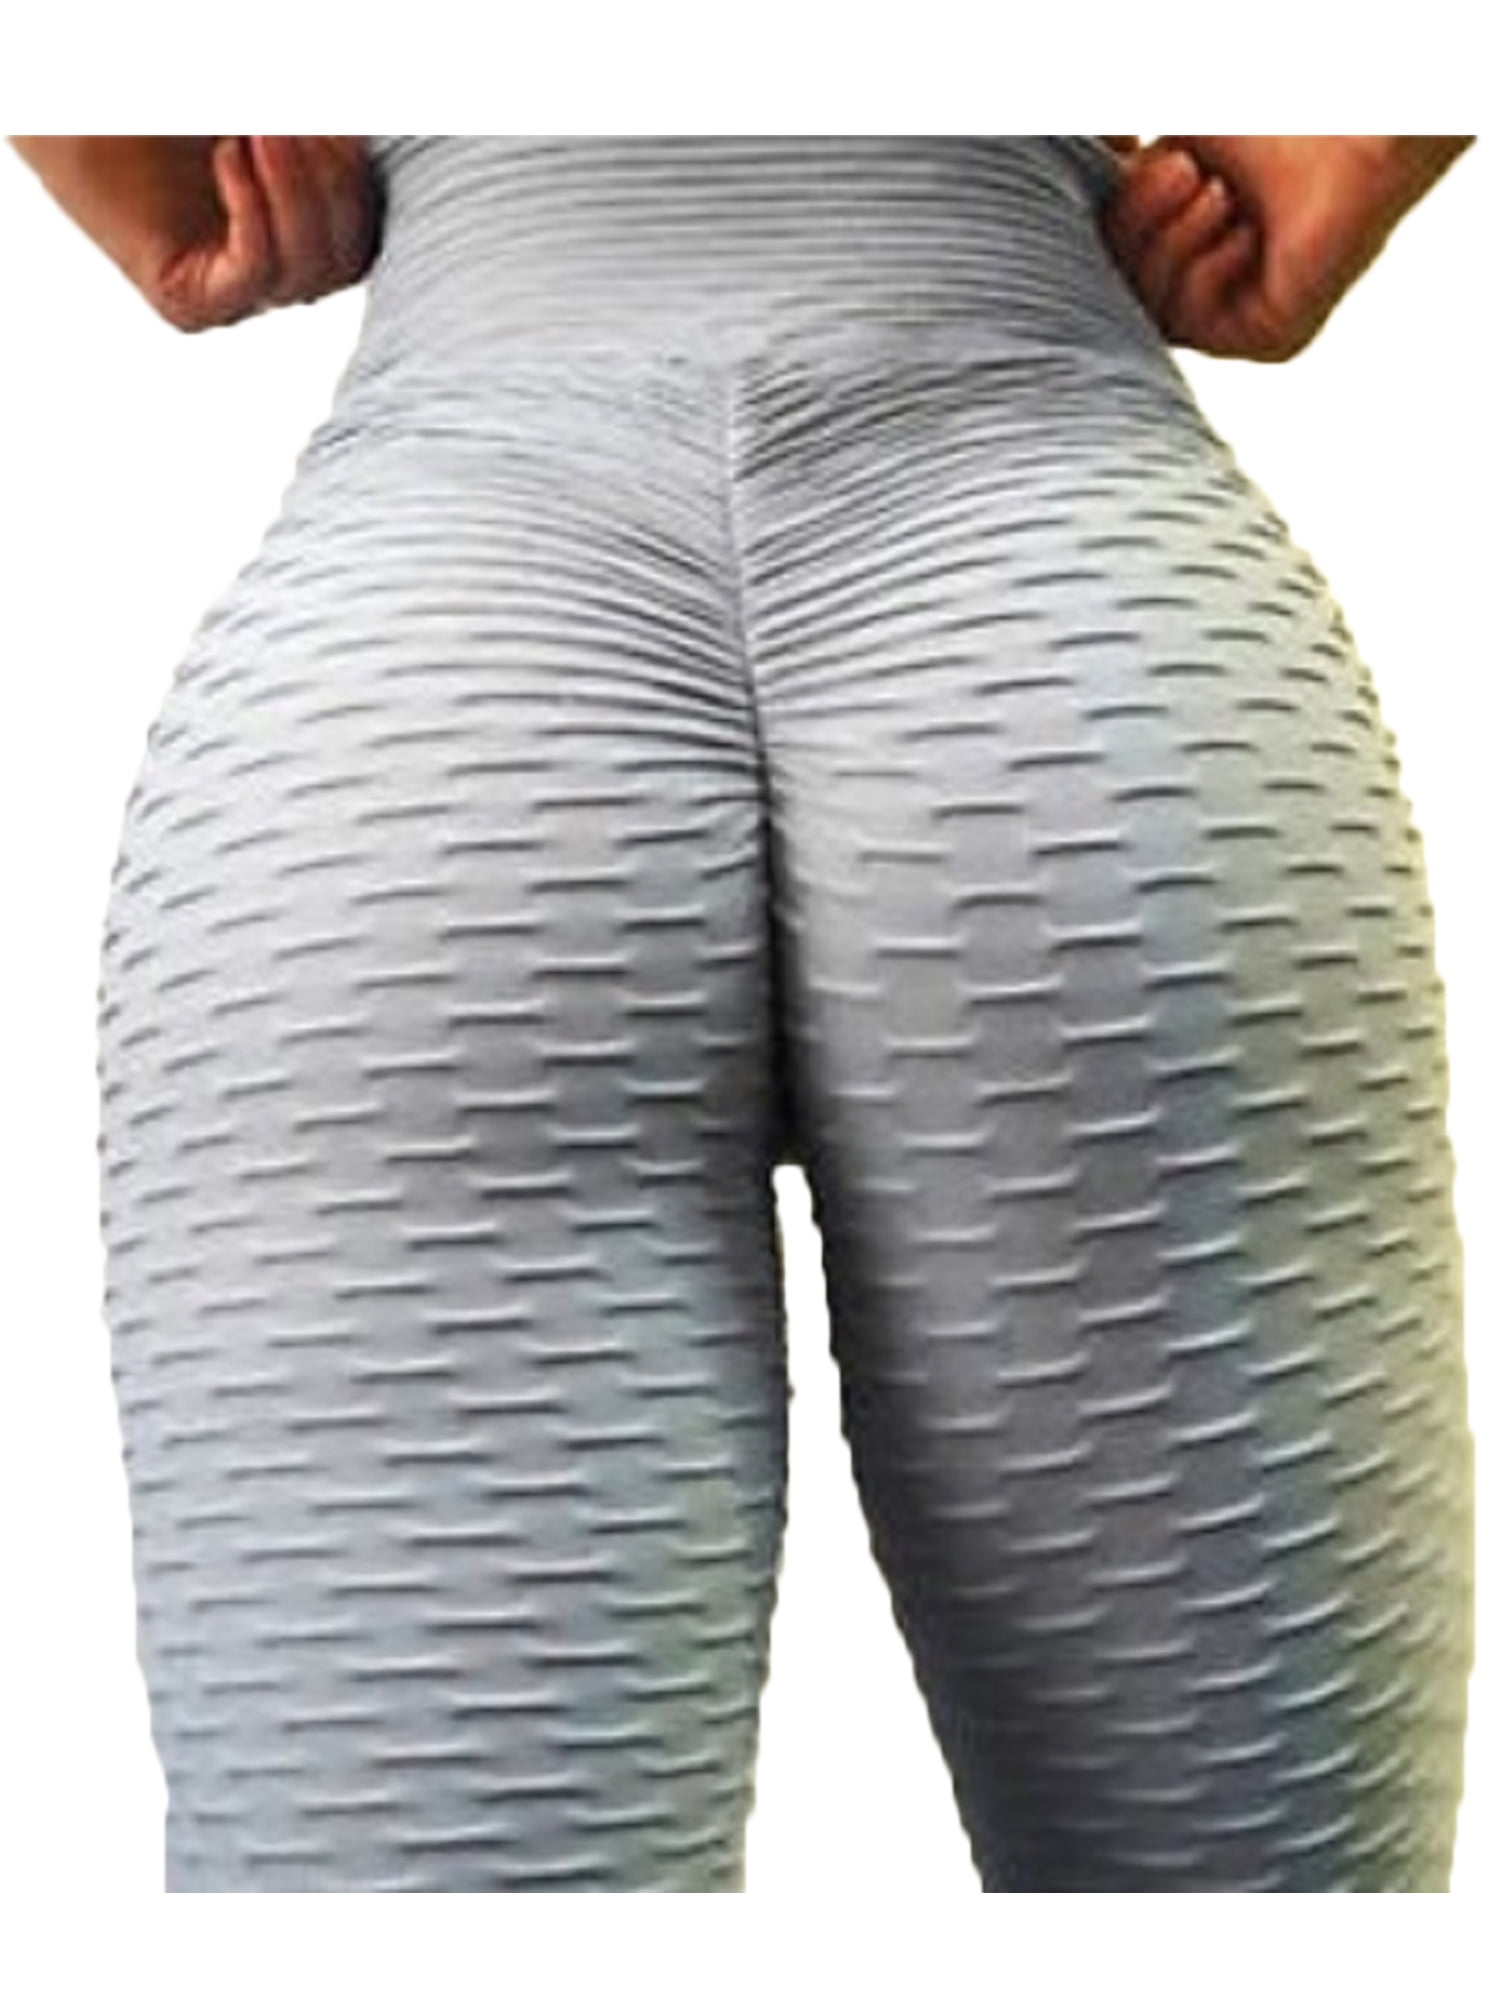 Details about   Women Yoga Gym Anti-Cellulite Leggings Fitness Ladies Butt Lift Elastic Pants SM 